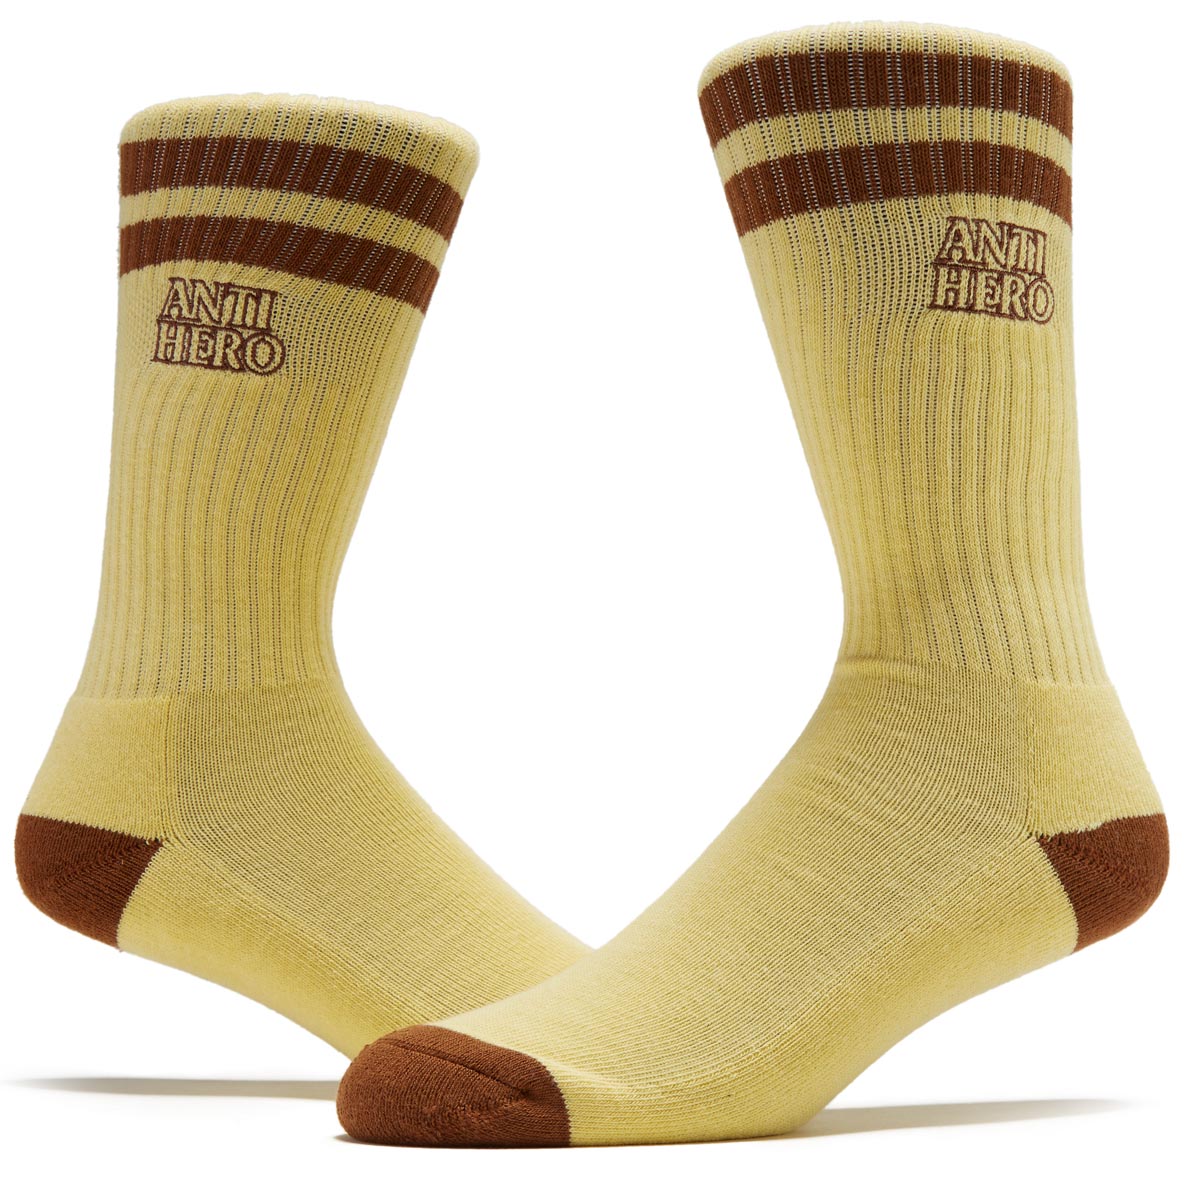 Anti-Hero Blackhero Outline Emb Socks - Pale Yellow/Brown image 2